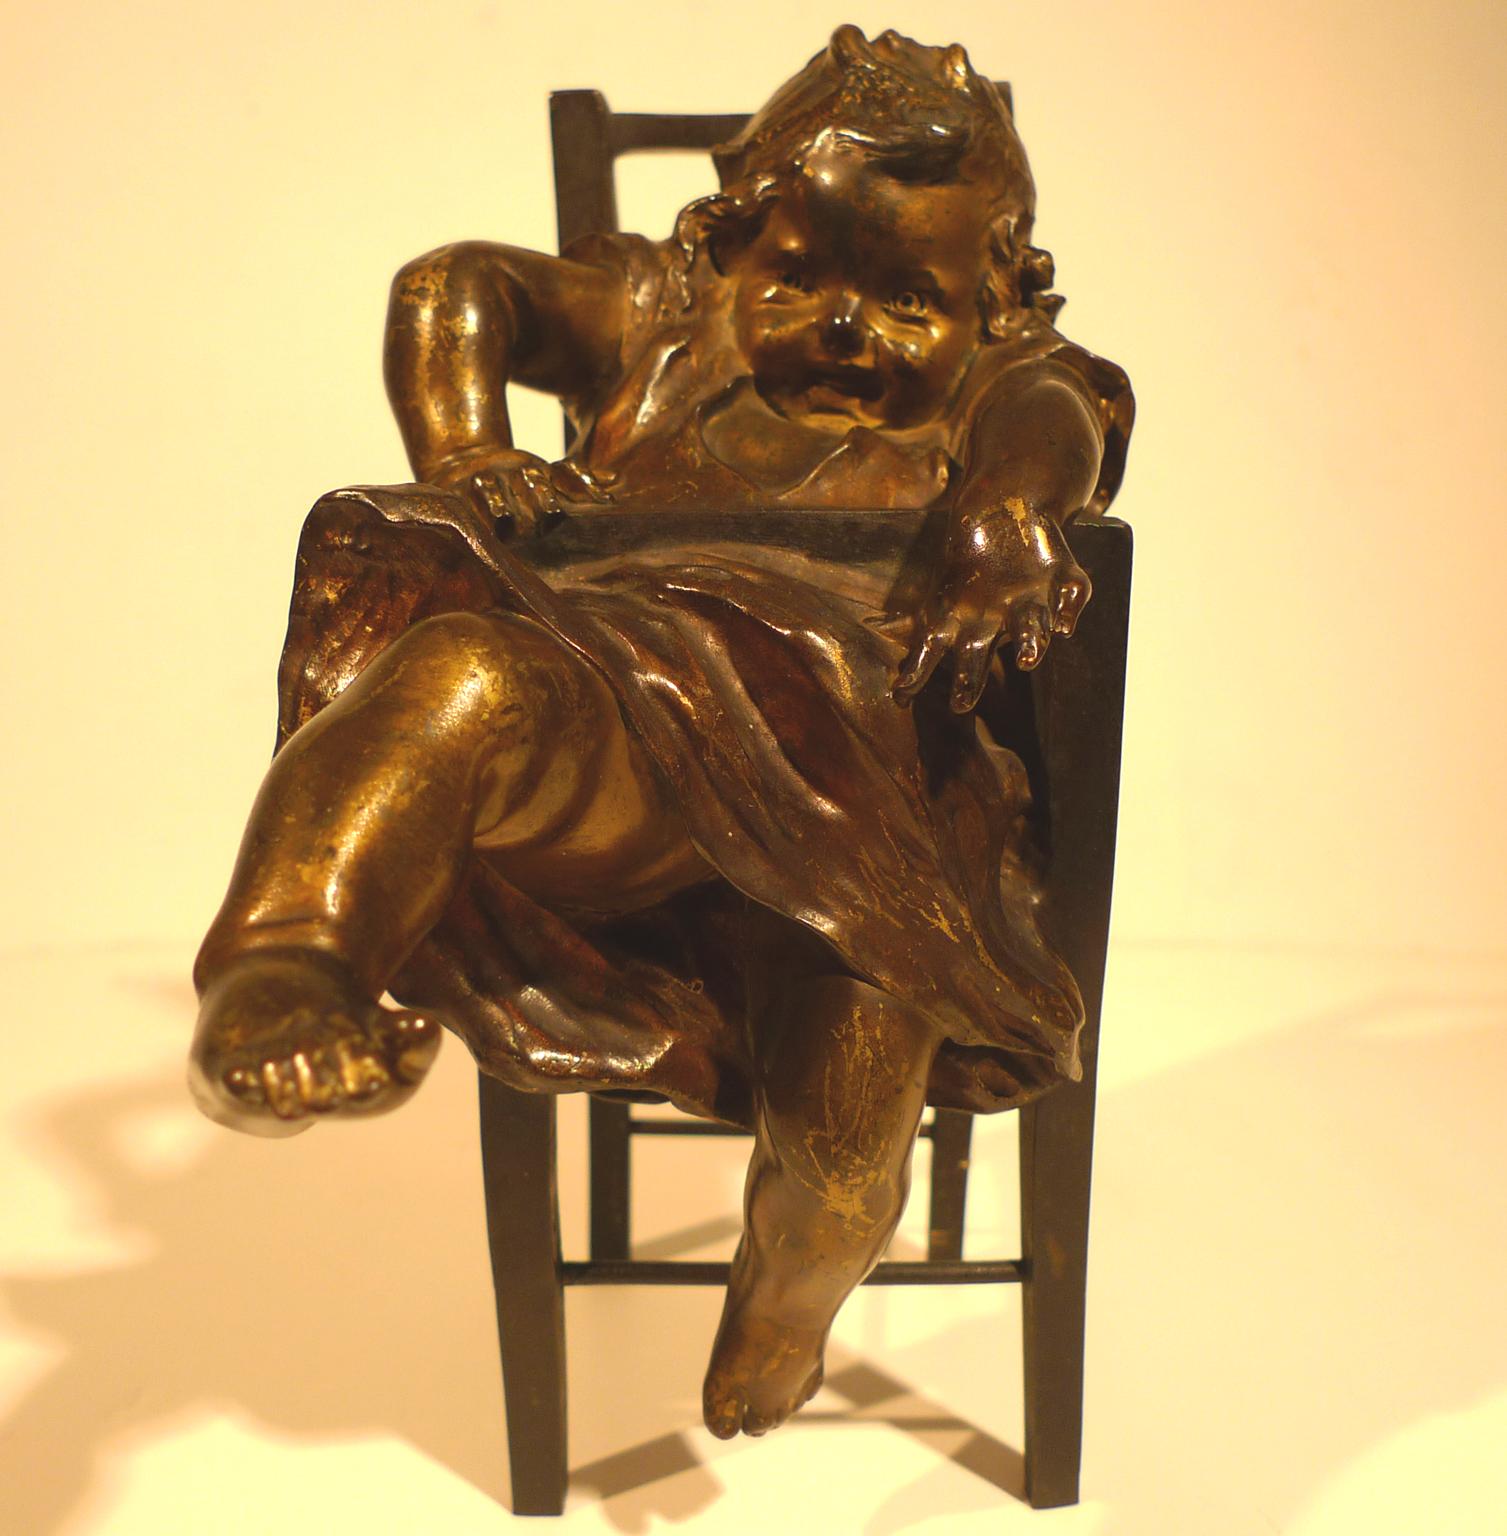  "A Girl Sitting on a High Chair" 20th Century Bronze Sculpture by Juan Clará